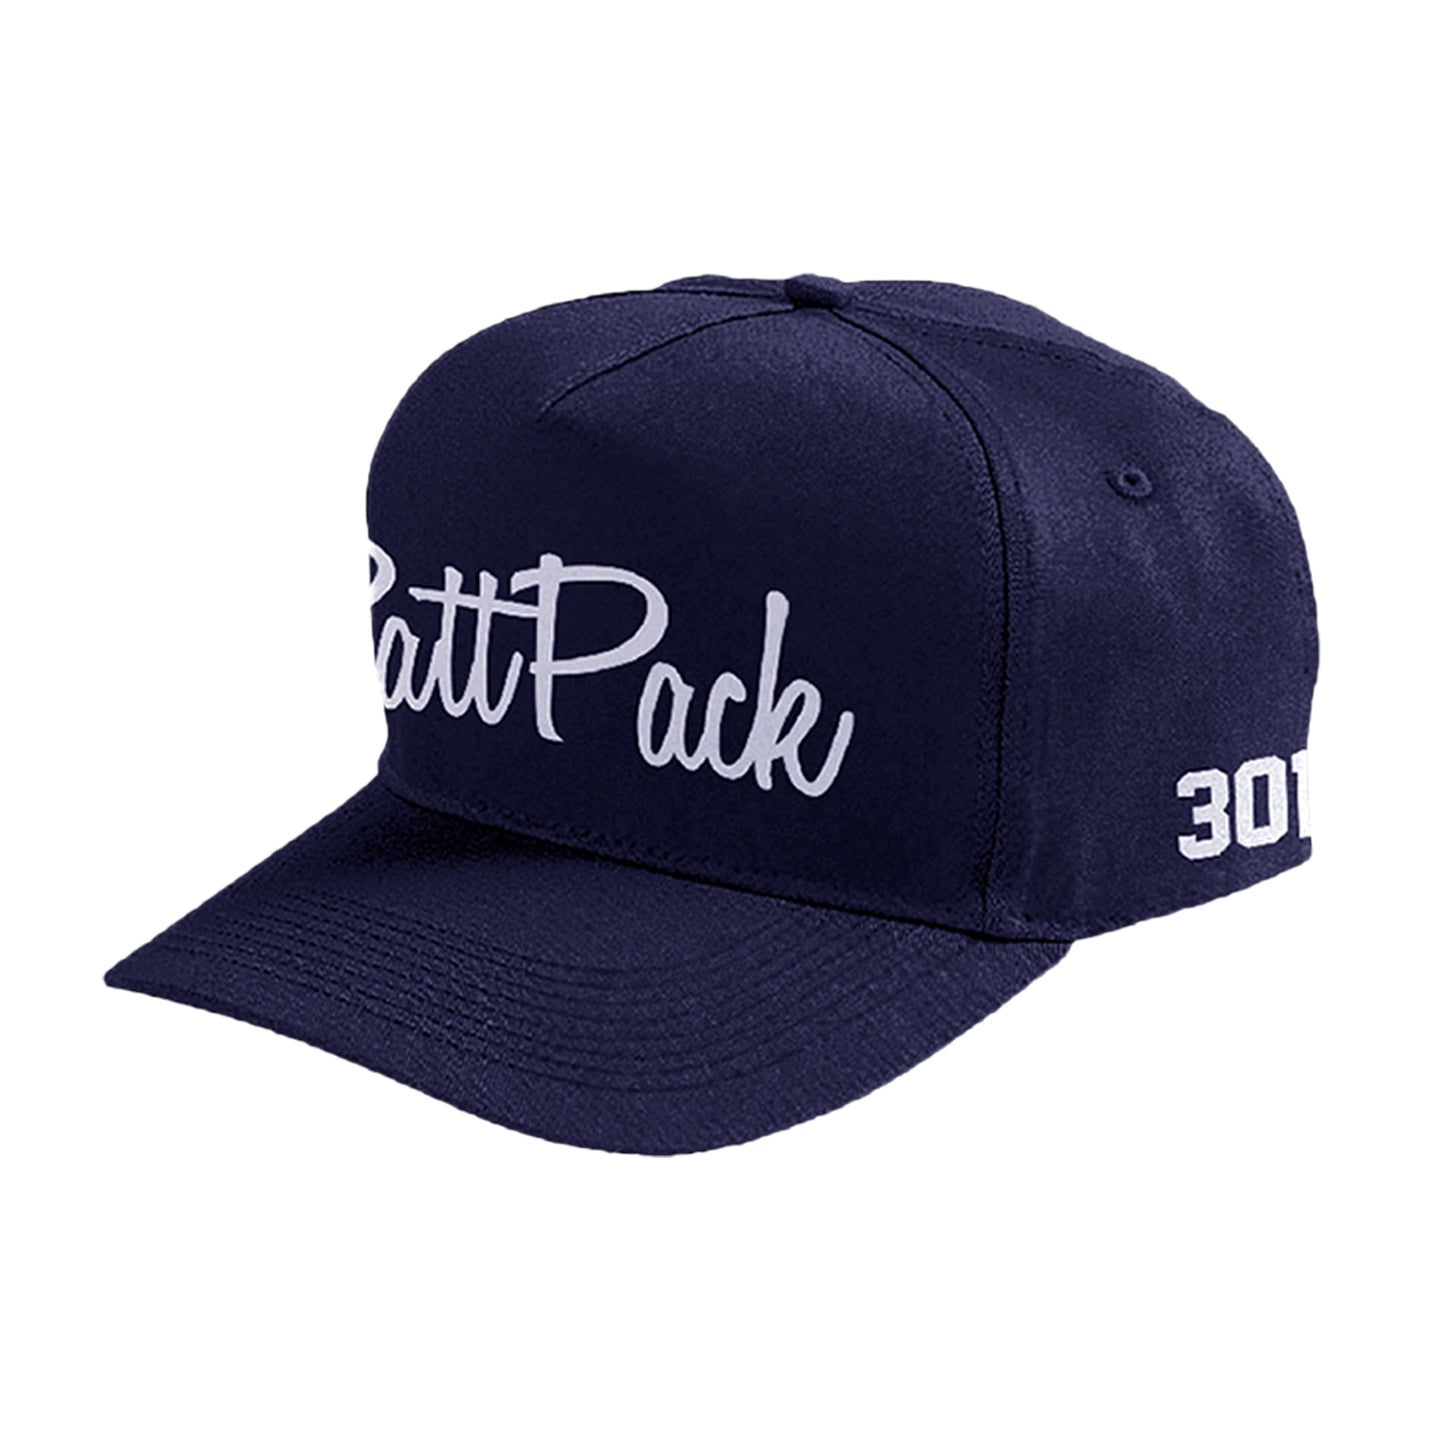 Rattpack Snapback Navy Hat